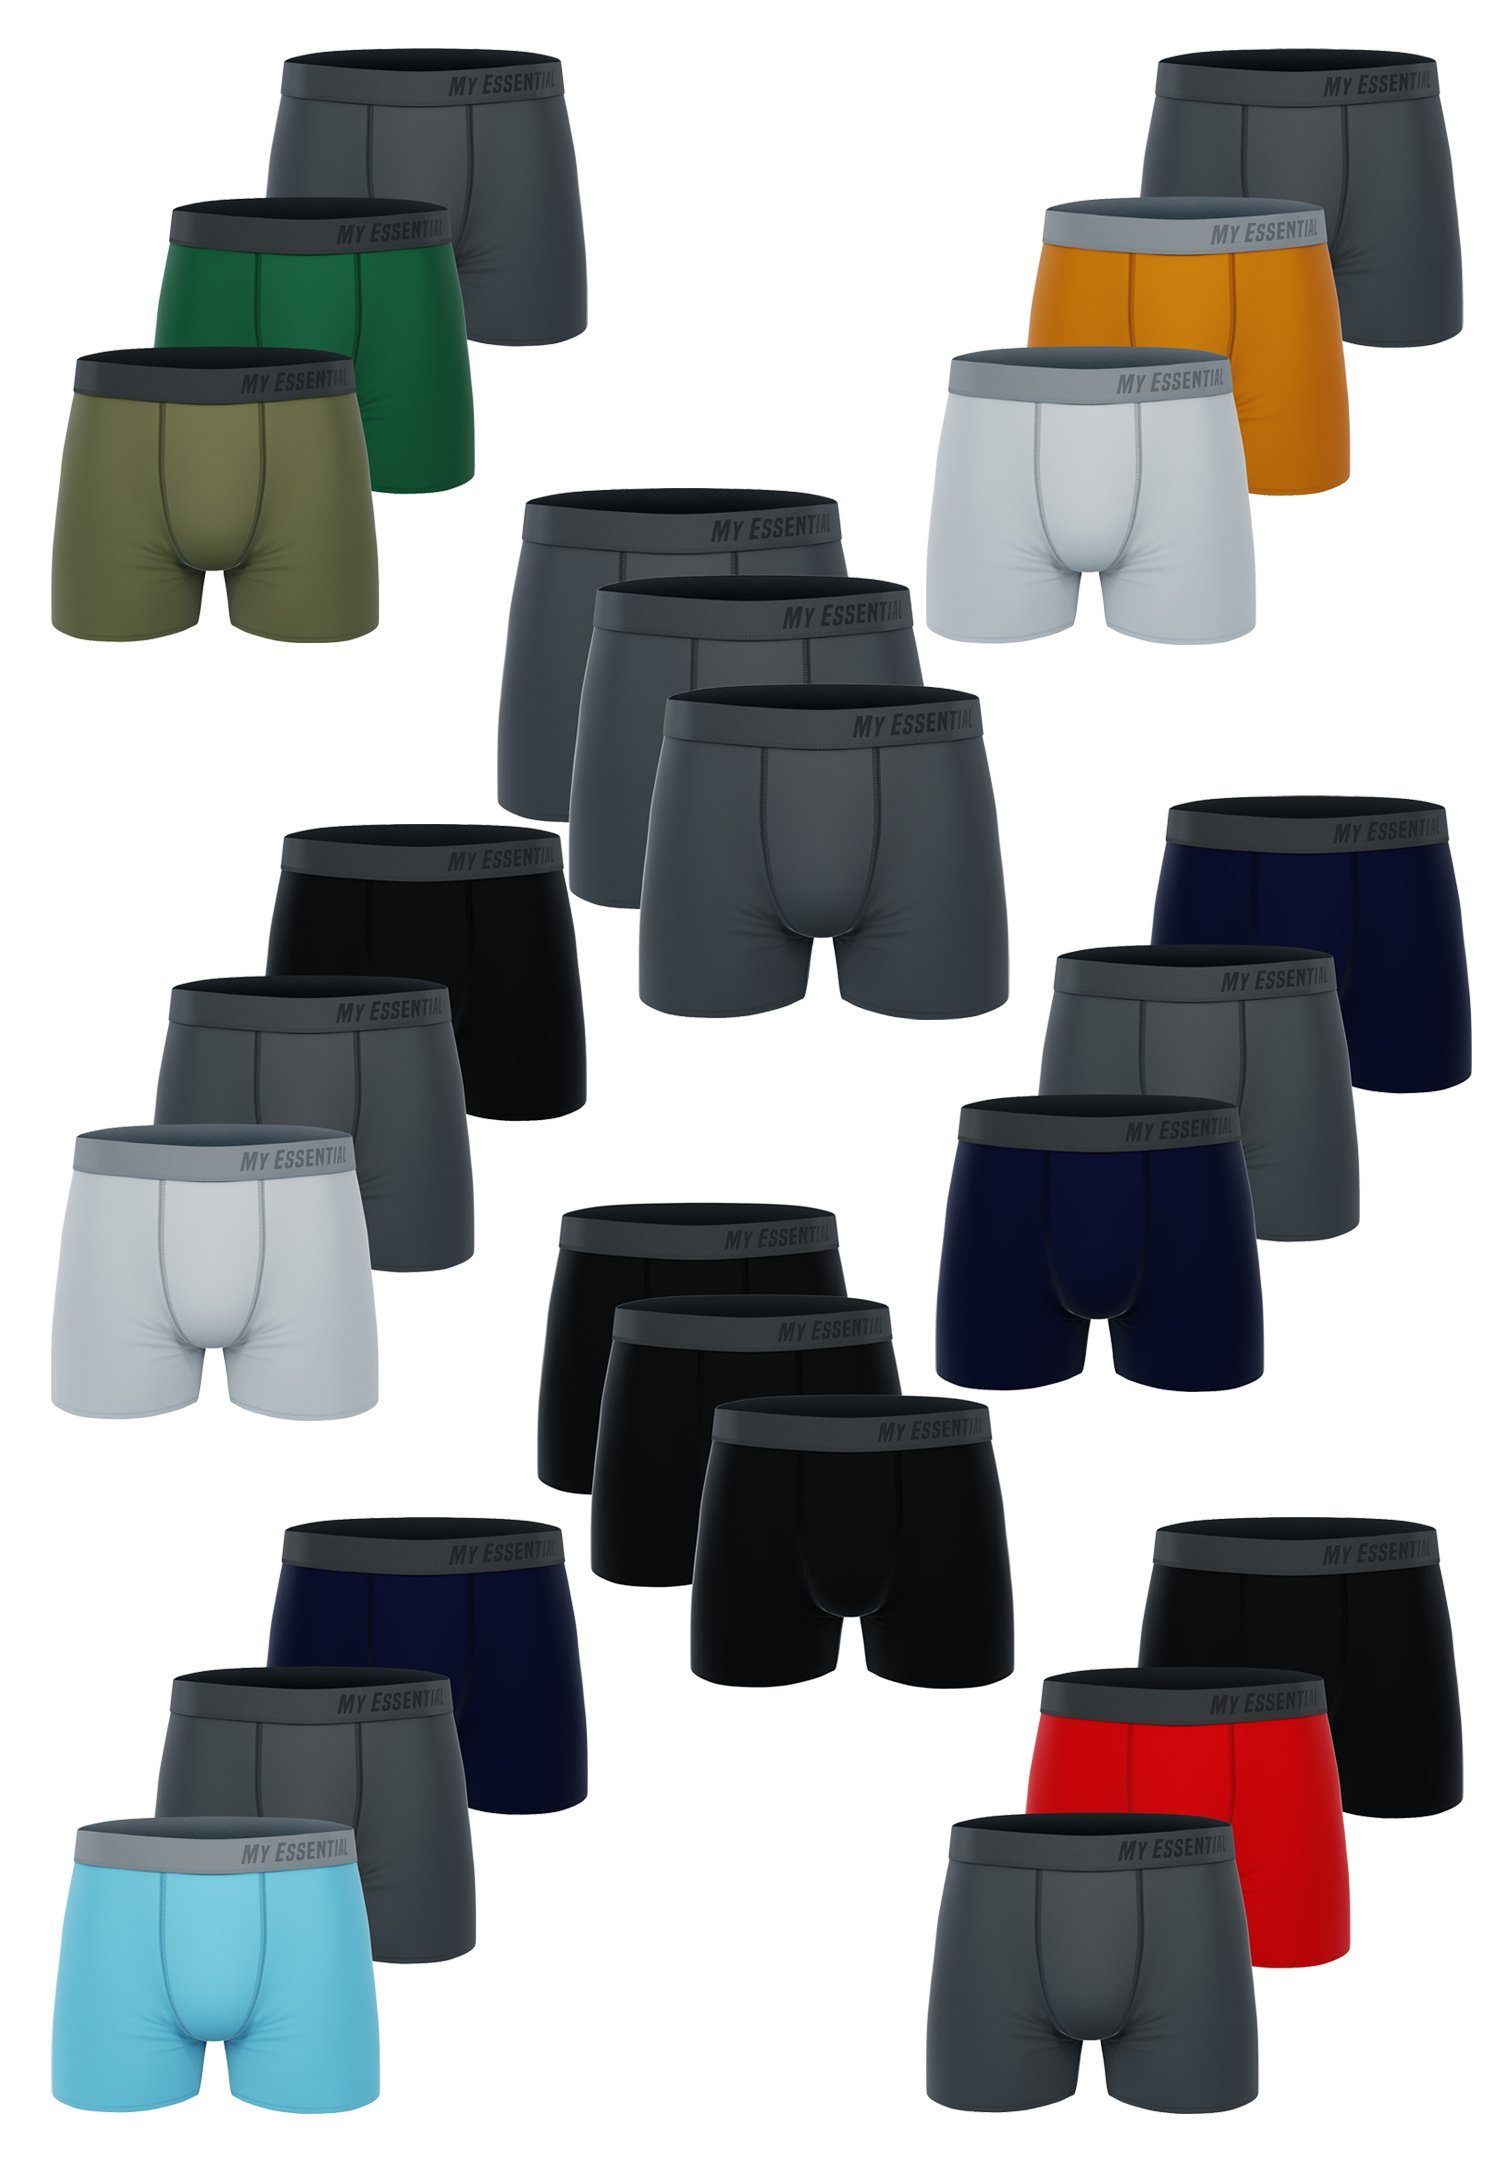 My Essential Clothing Boxershorts My (Spar-Pack, Pack Cotton Boxers Black 3 3-St., Essential 3er-Pack) Bio